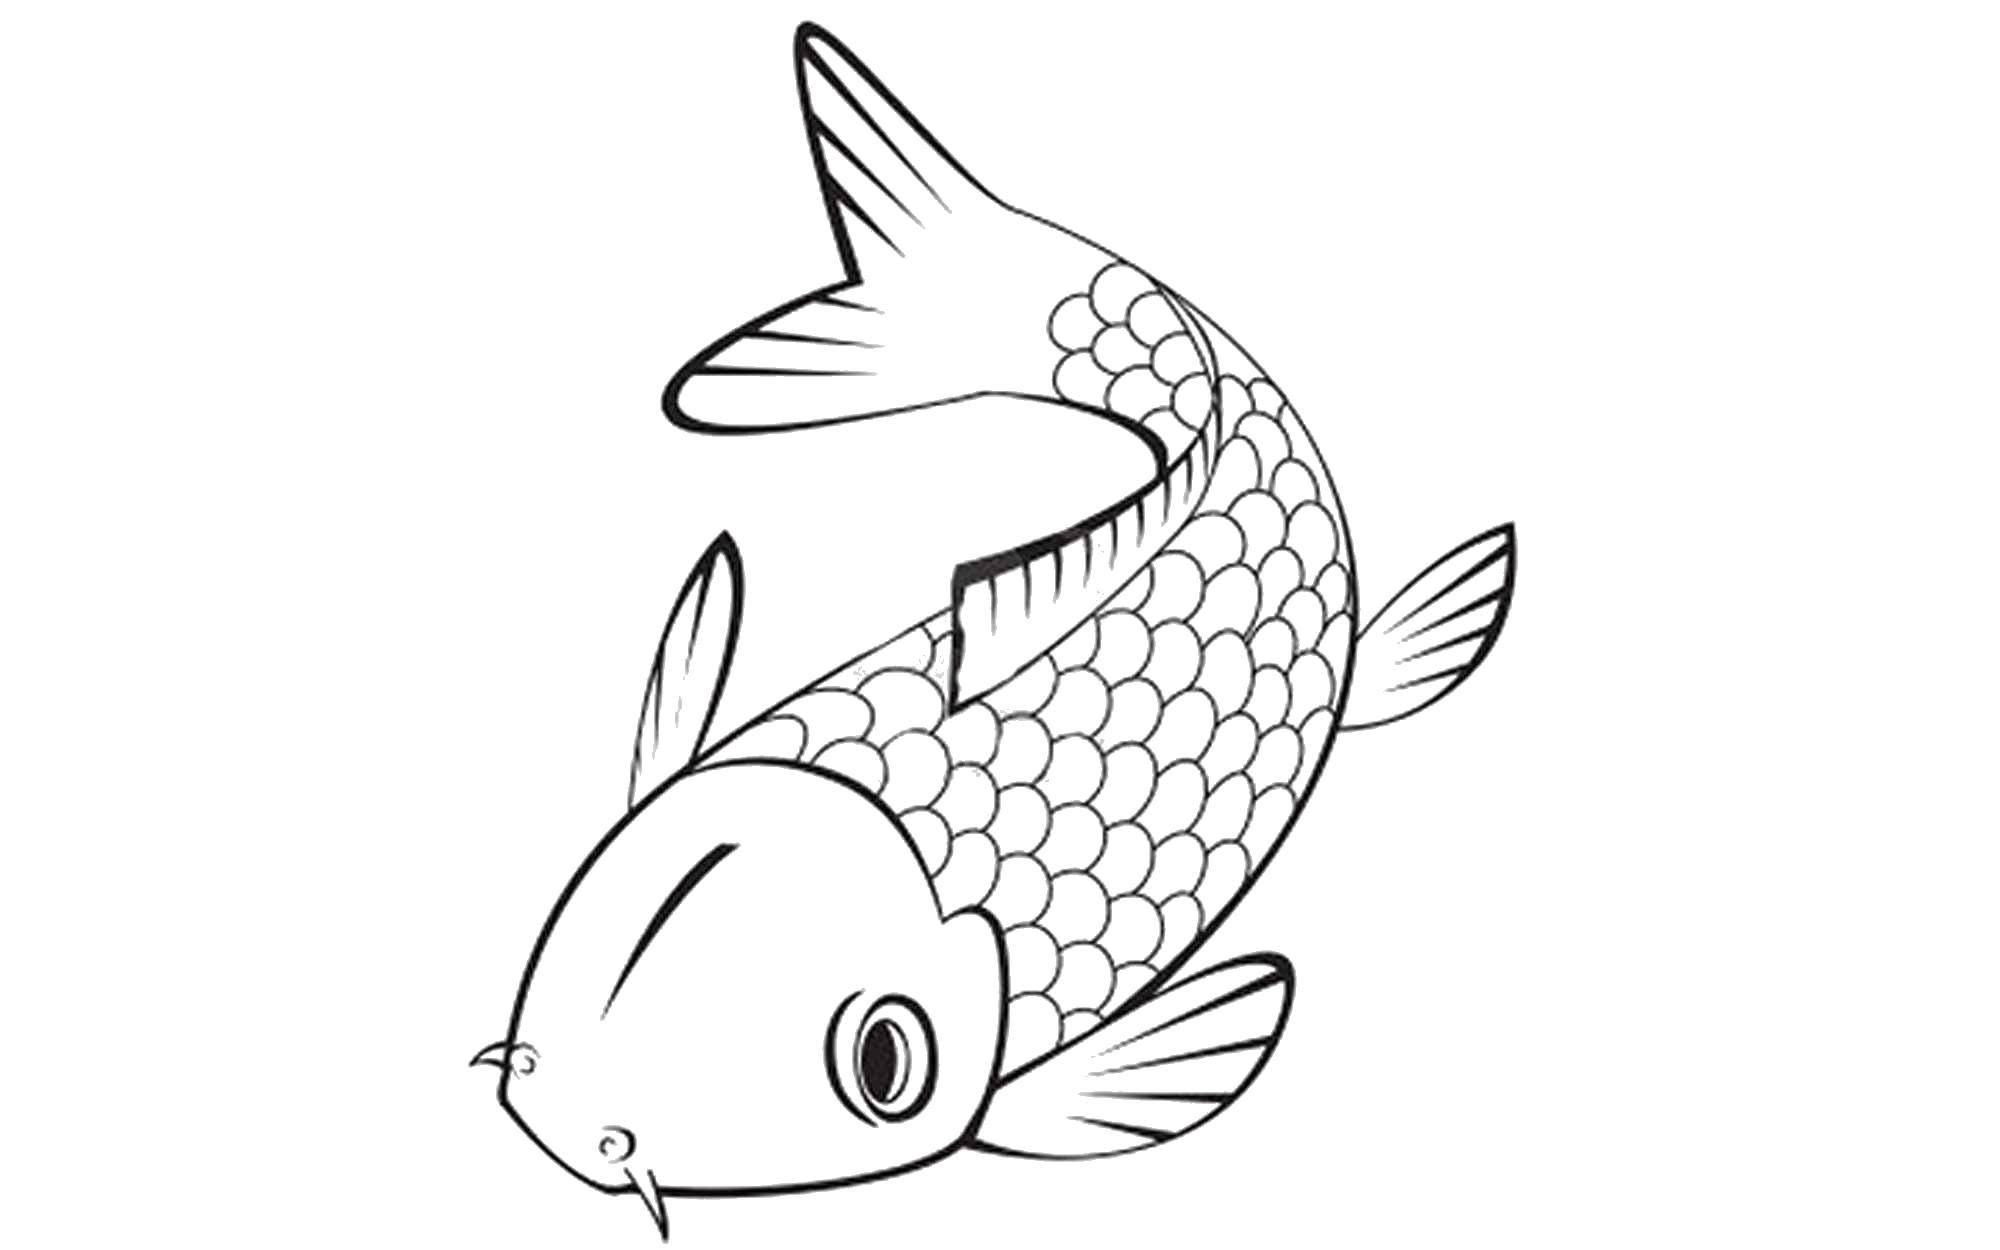 Coloring Catfish. Category fish. Tags:  Underwater world, fish, catfish.